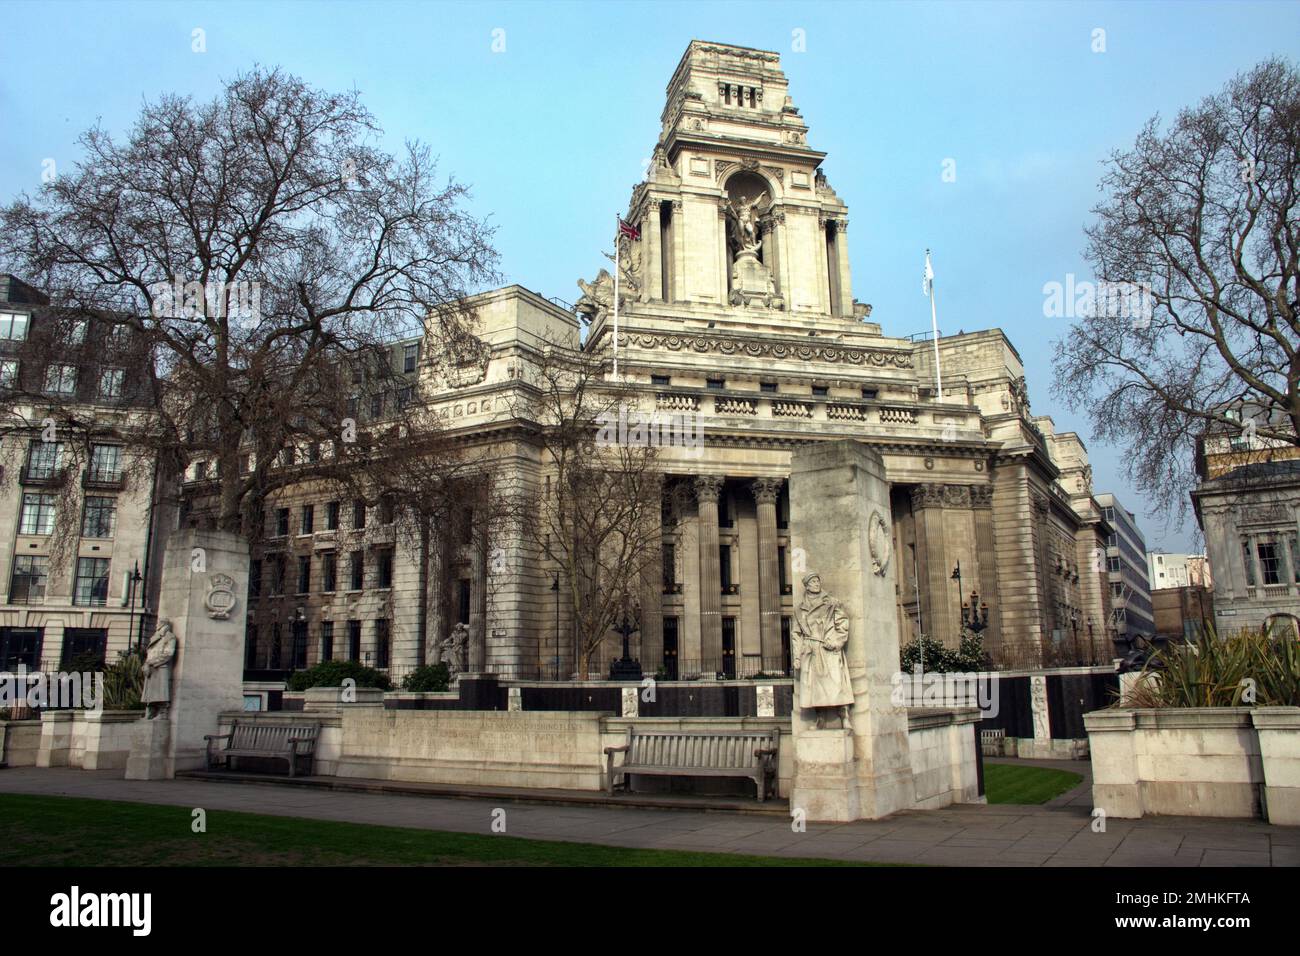 Facade of Ten Trinity Square building in London, UK. Stock Photo